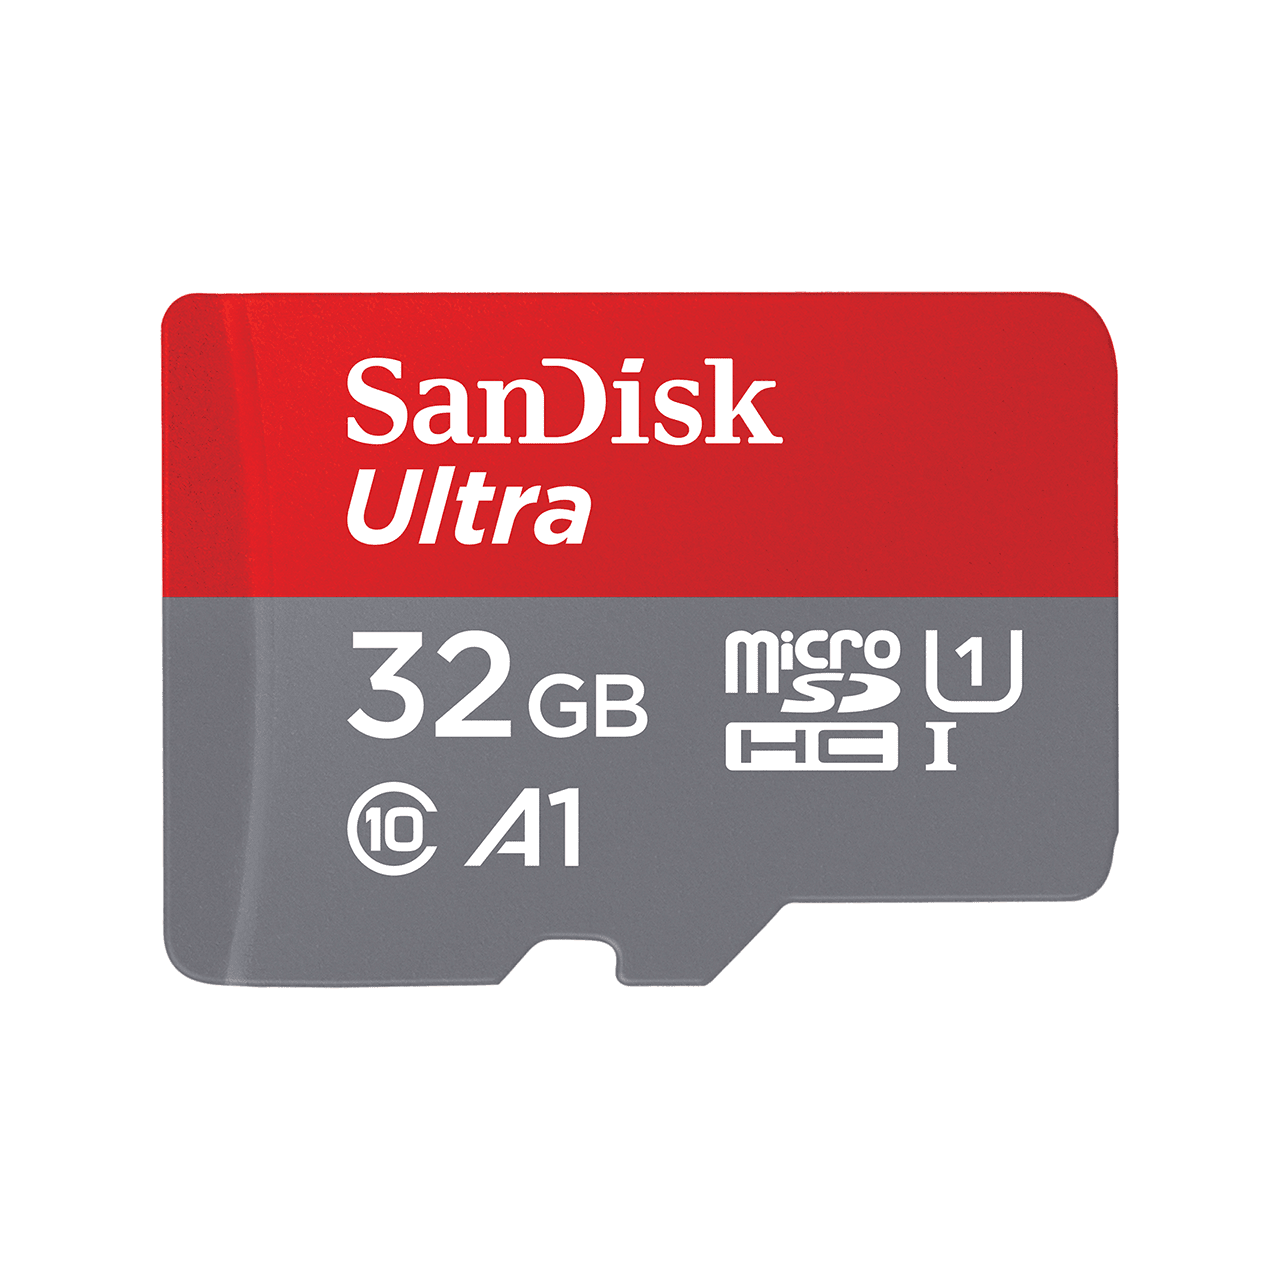 SanDisk Ultra MicroSD Card - 100MB/s - 32GB